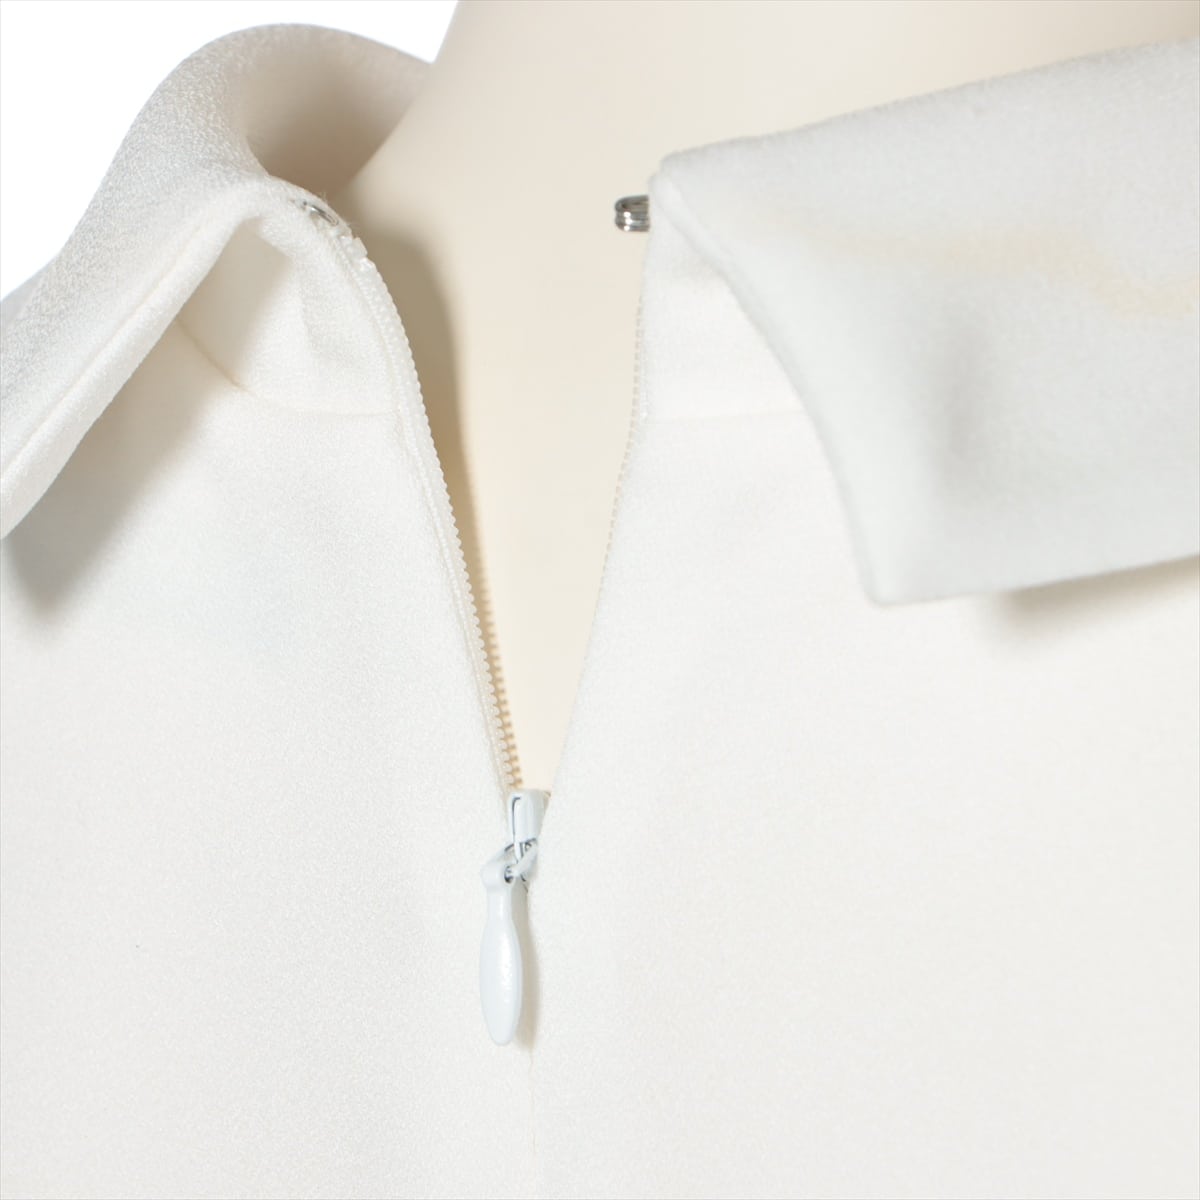 Christian Dior Triacetate Cut and sew 34 Ladies' White